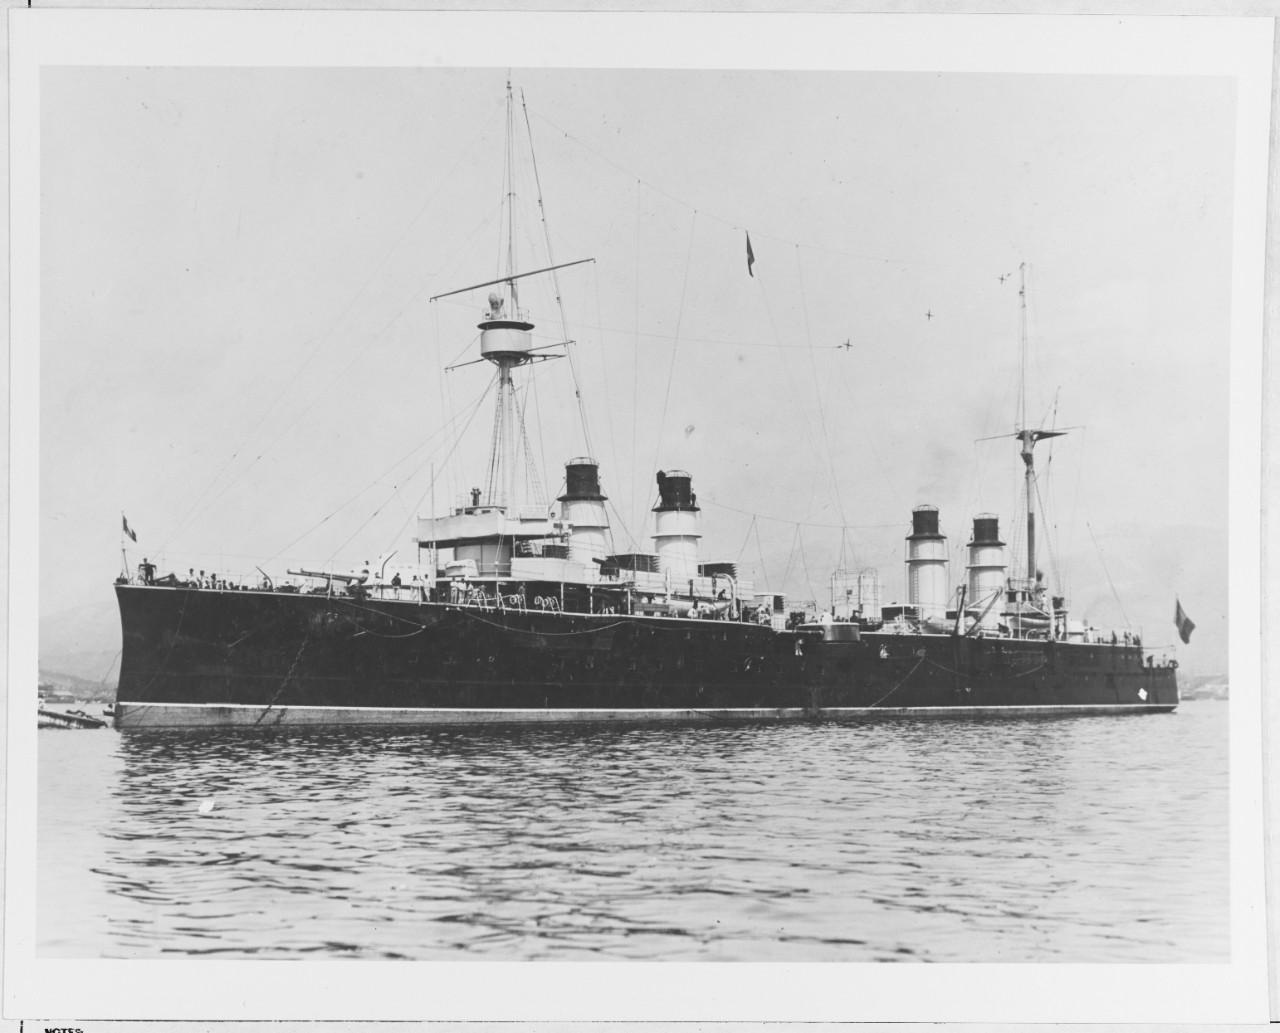 KLÉBER (French armored cruiser, 1902)